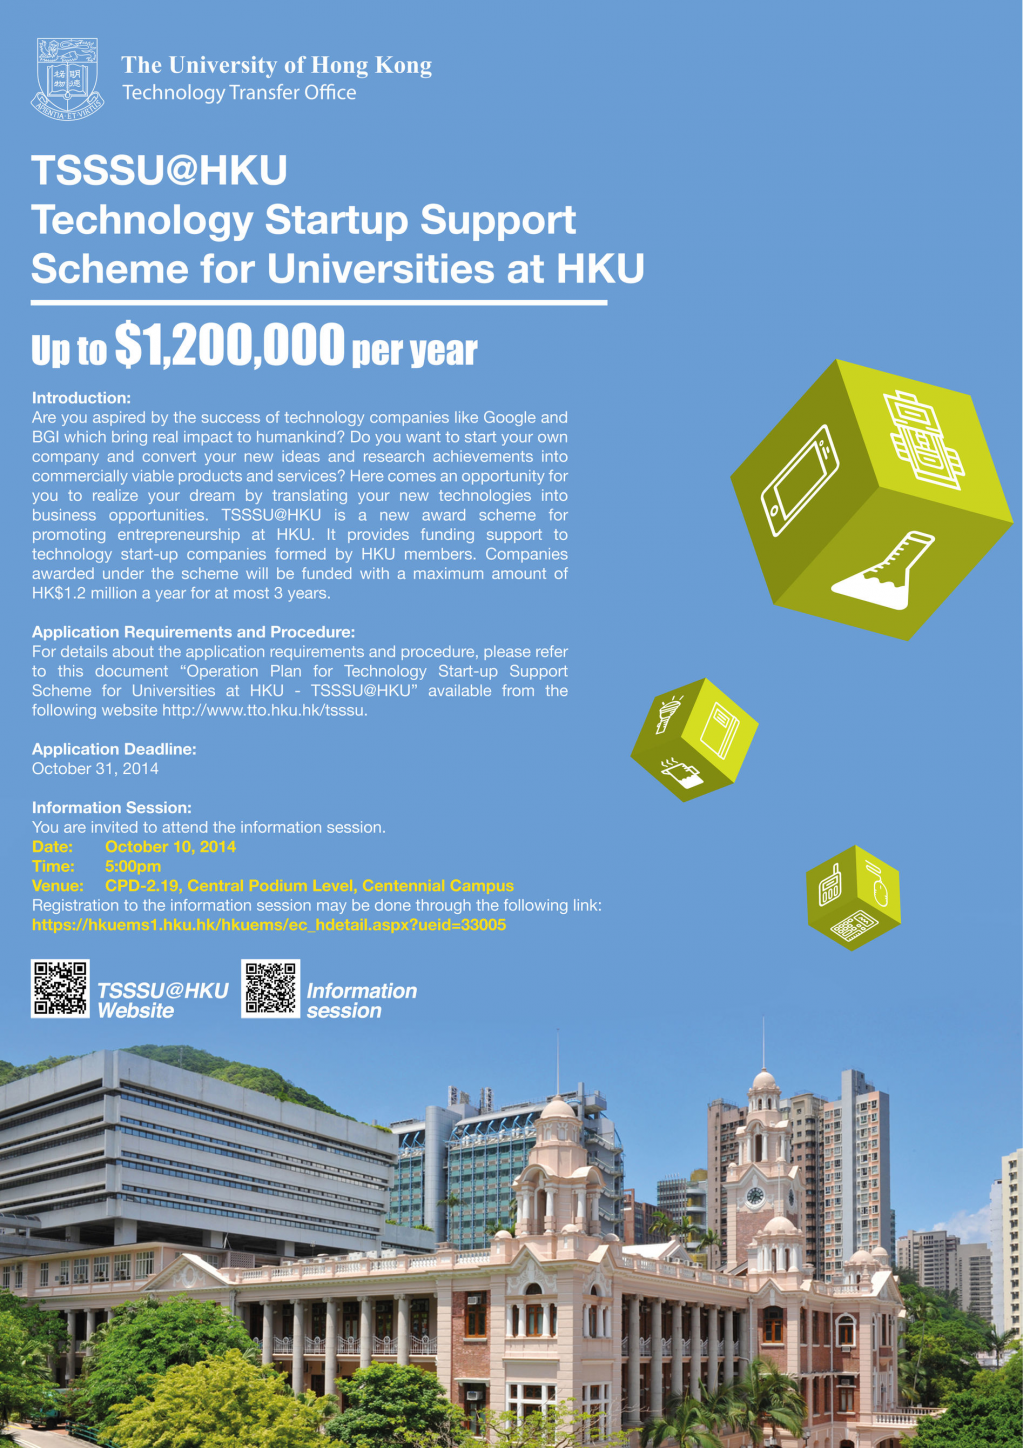 Technology Startup Support Scheme for Universities at HKU (TSSSU@HKU)